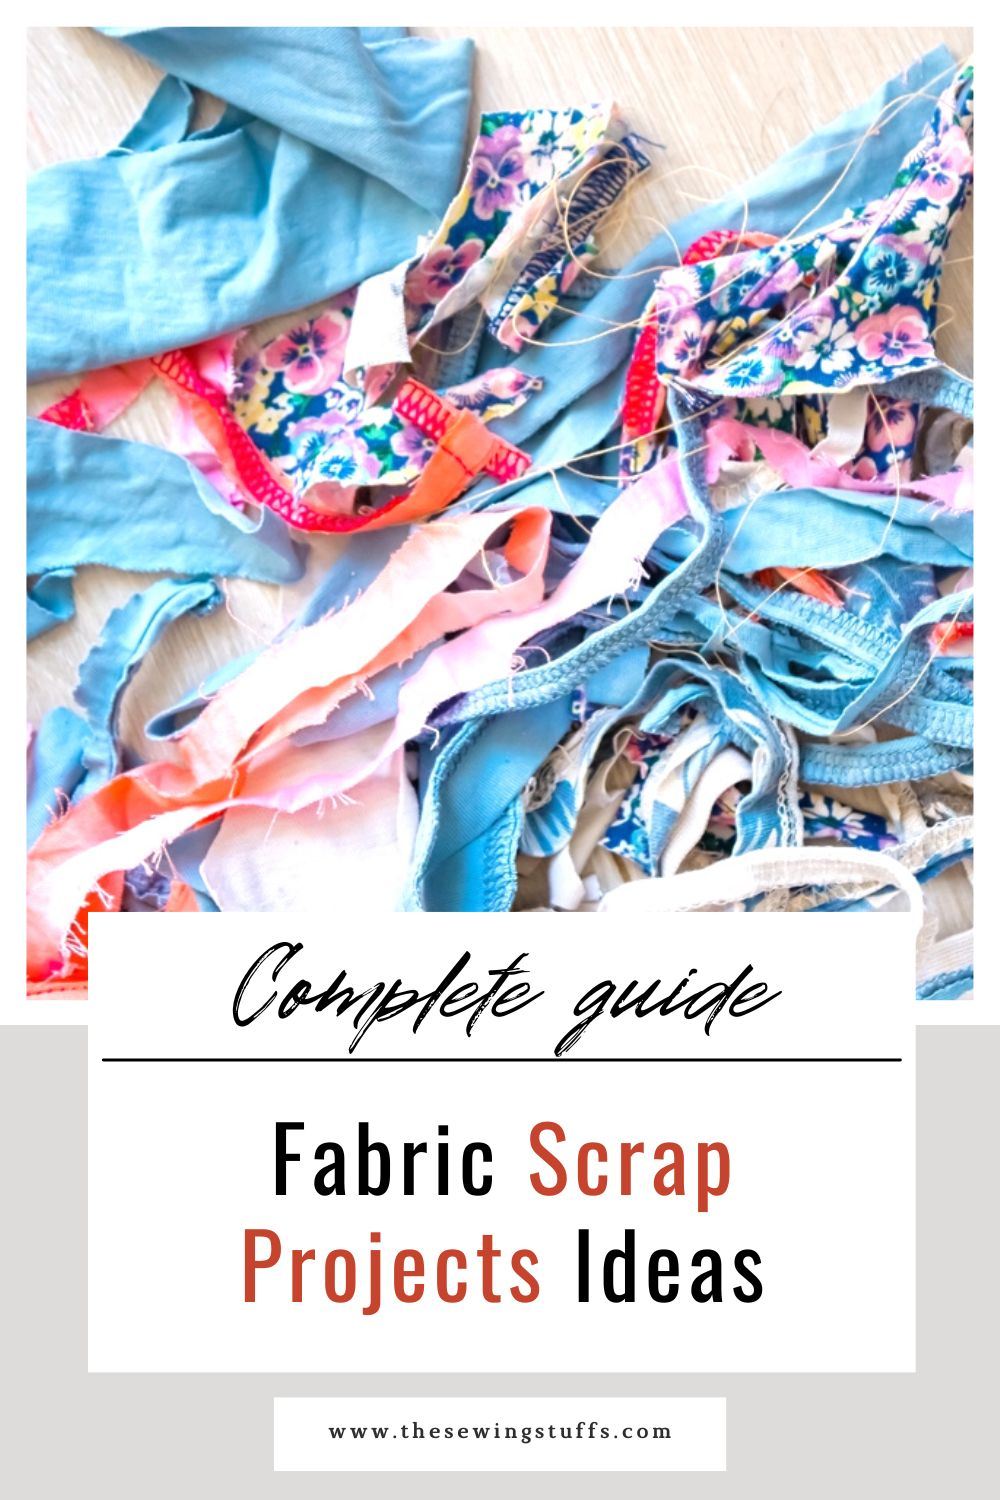 Fabric scrap projects Ideas